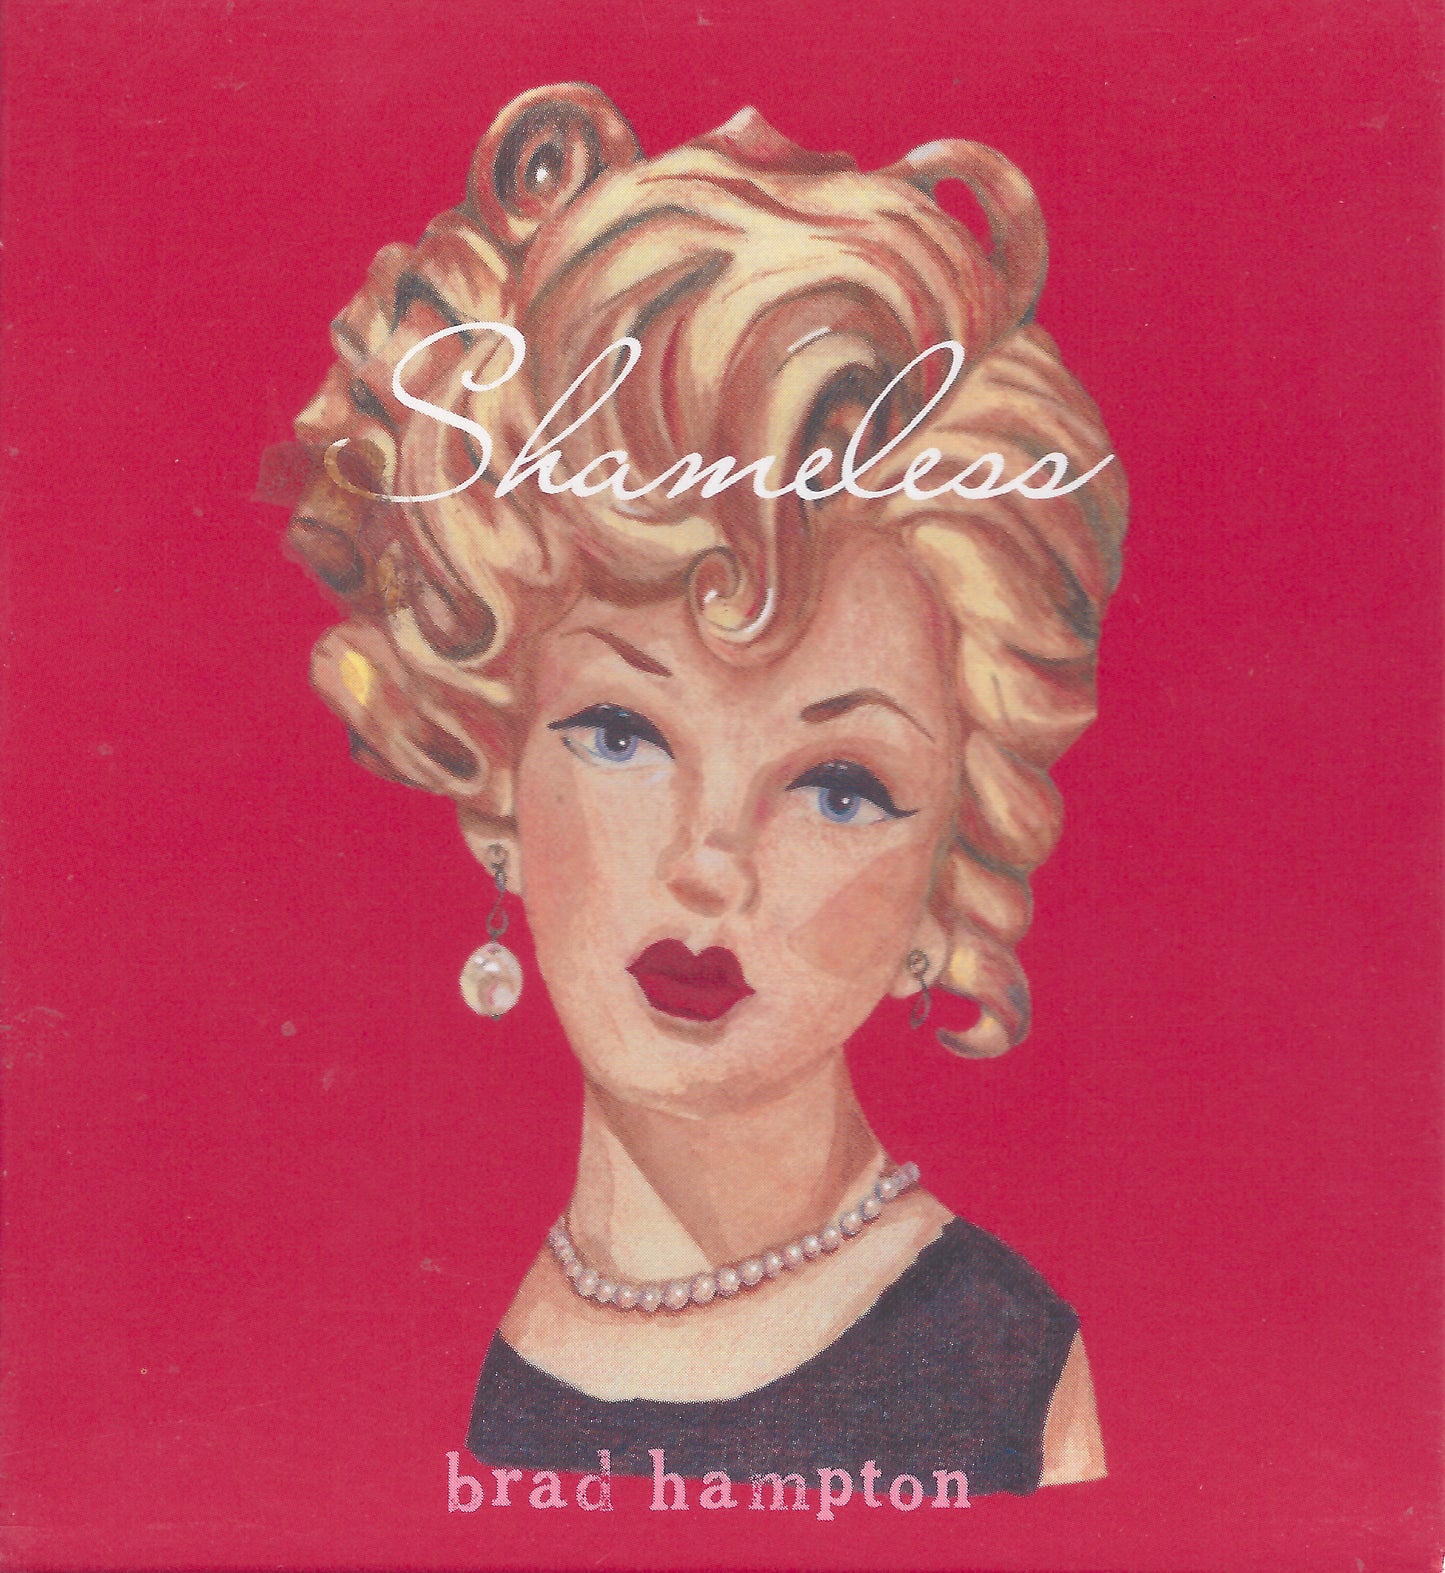 Brad Hampton - Shameless Album